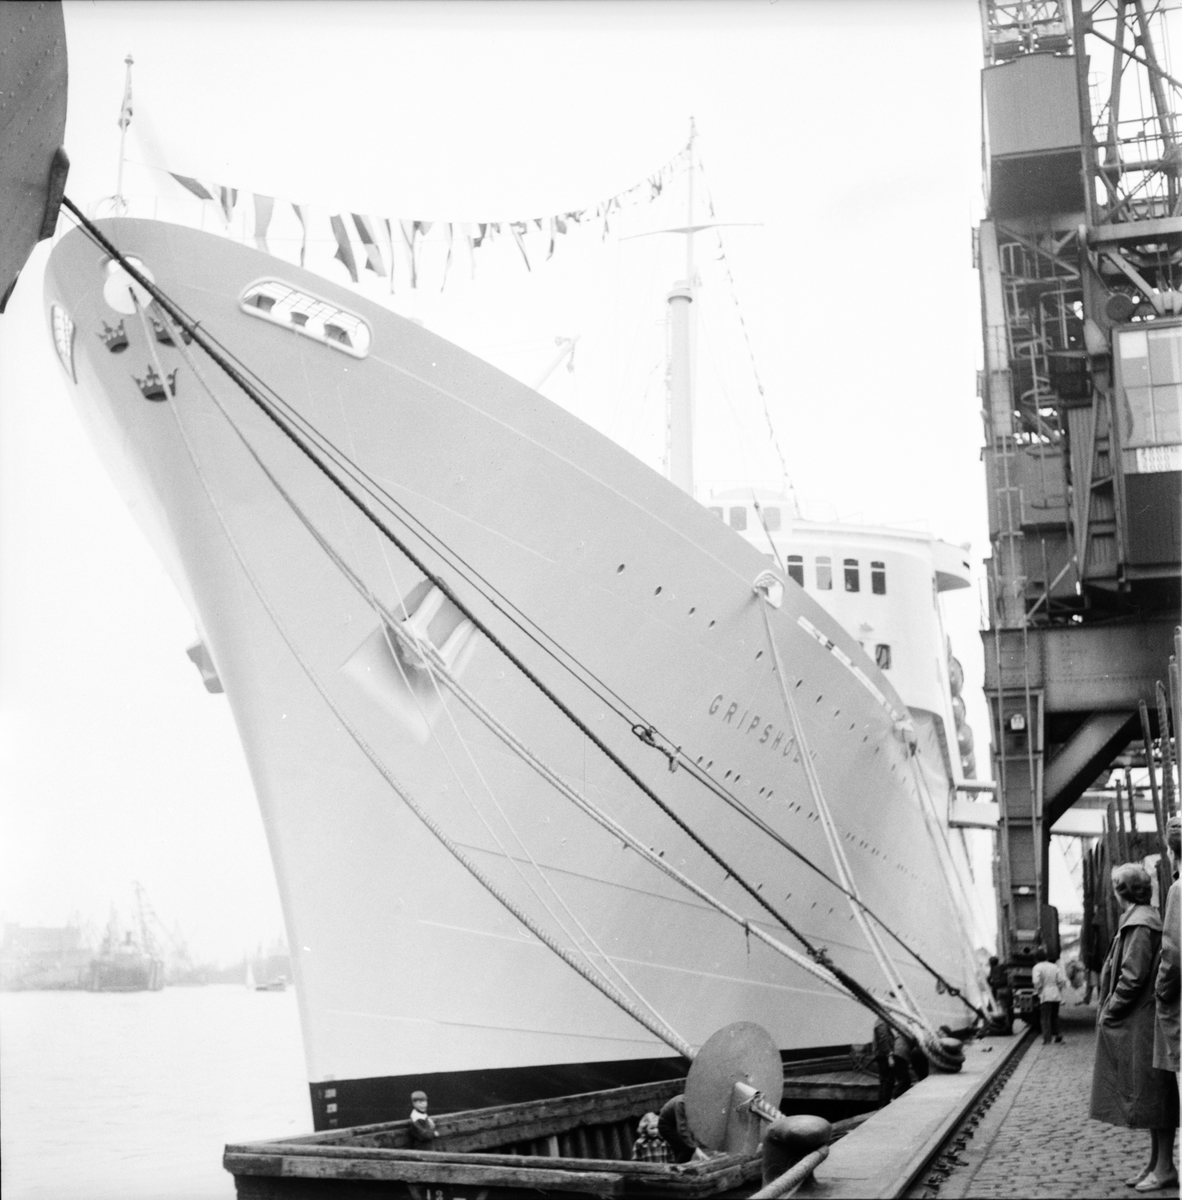 Göteborg. Lions-konferans. (båten Gripsholm)
1957